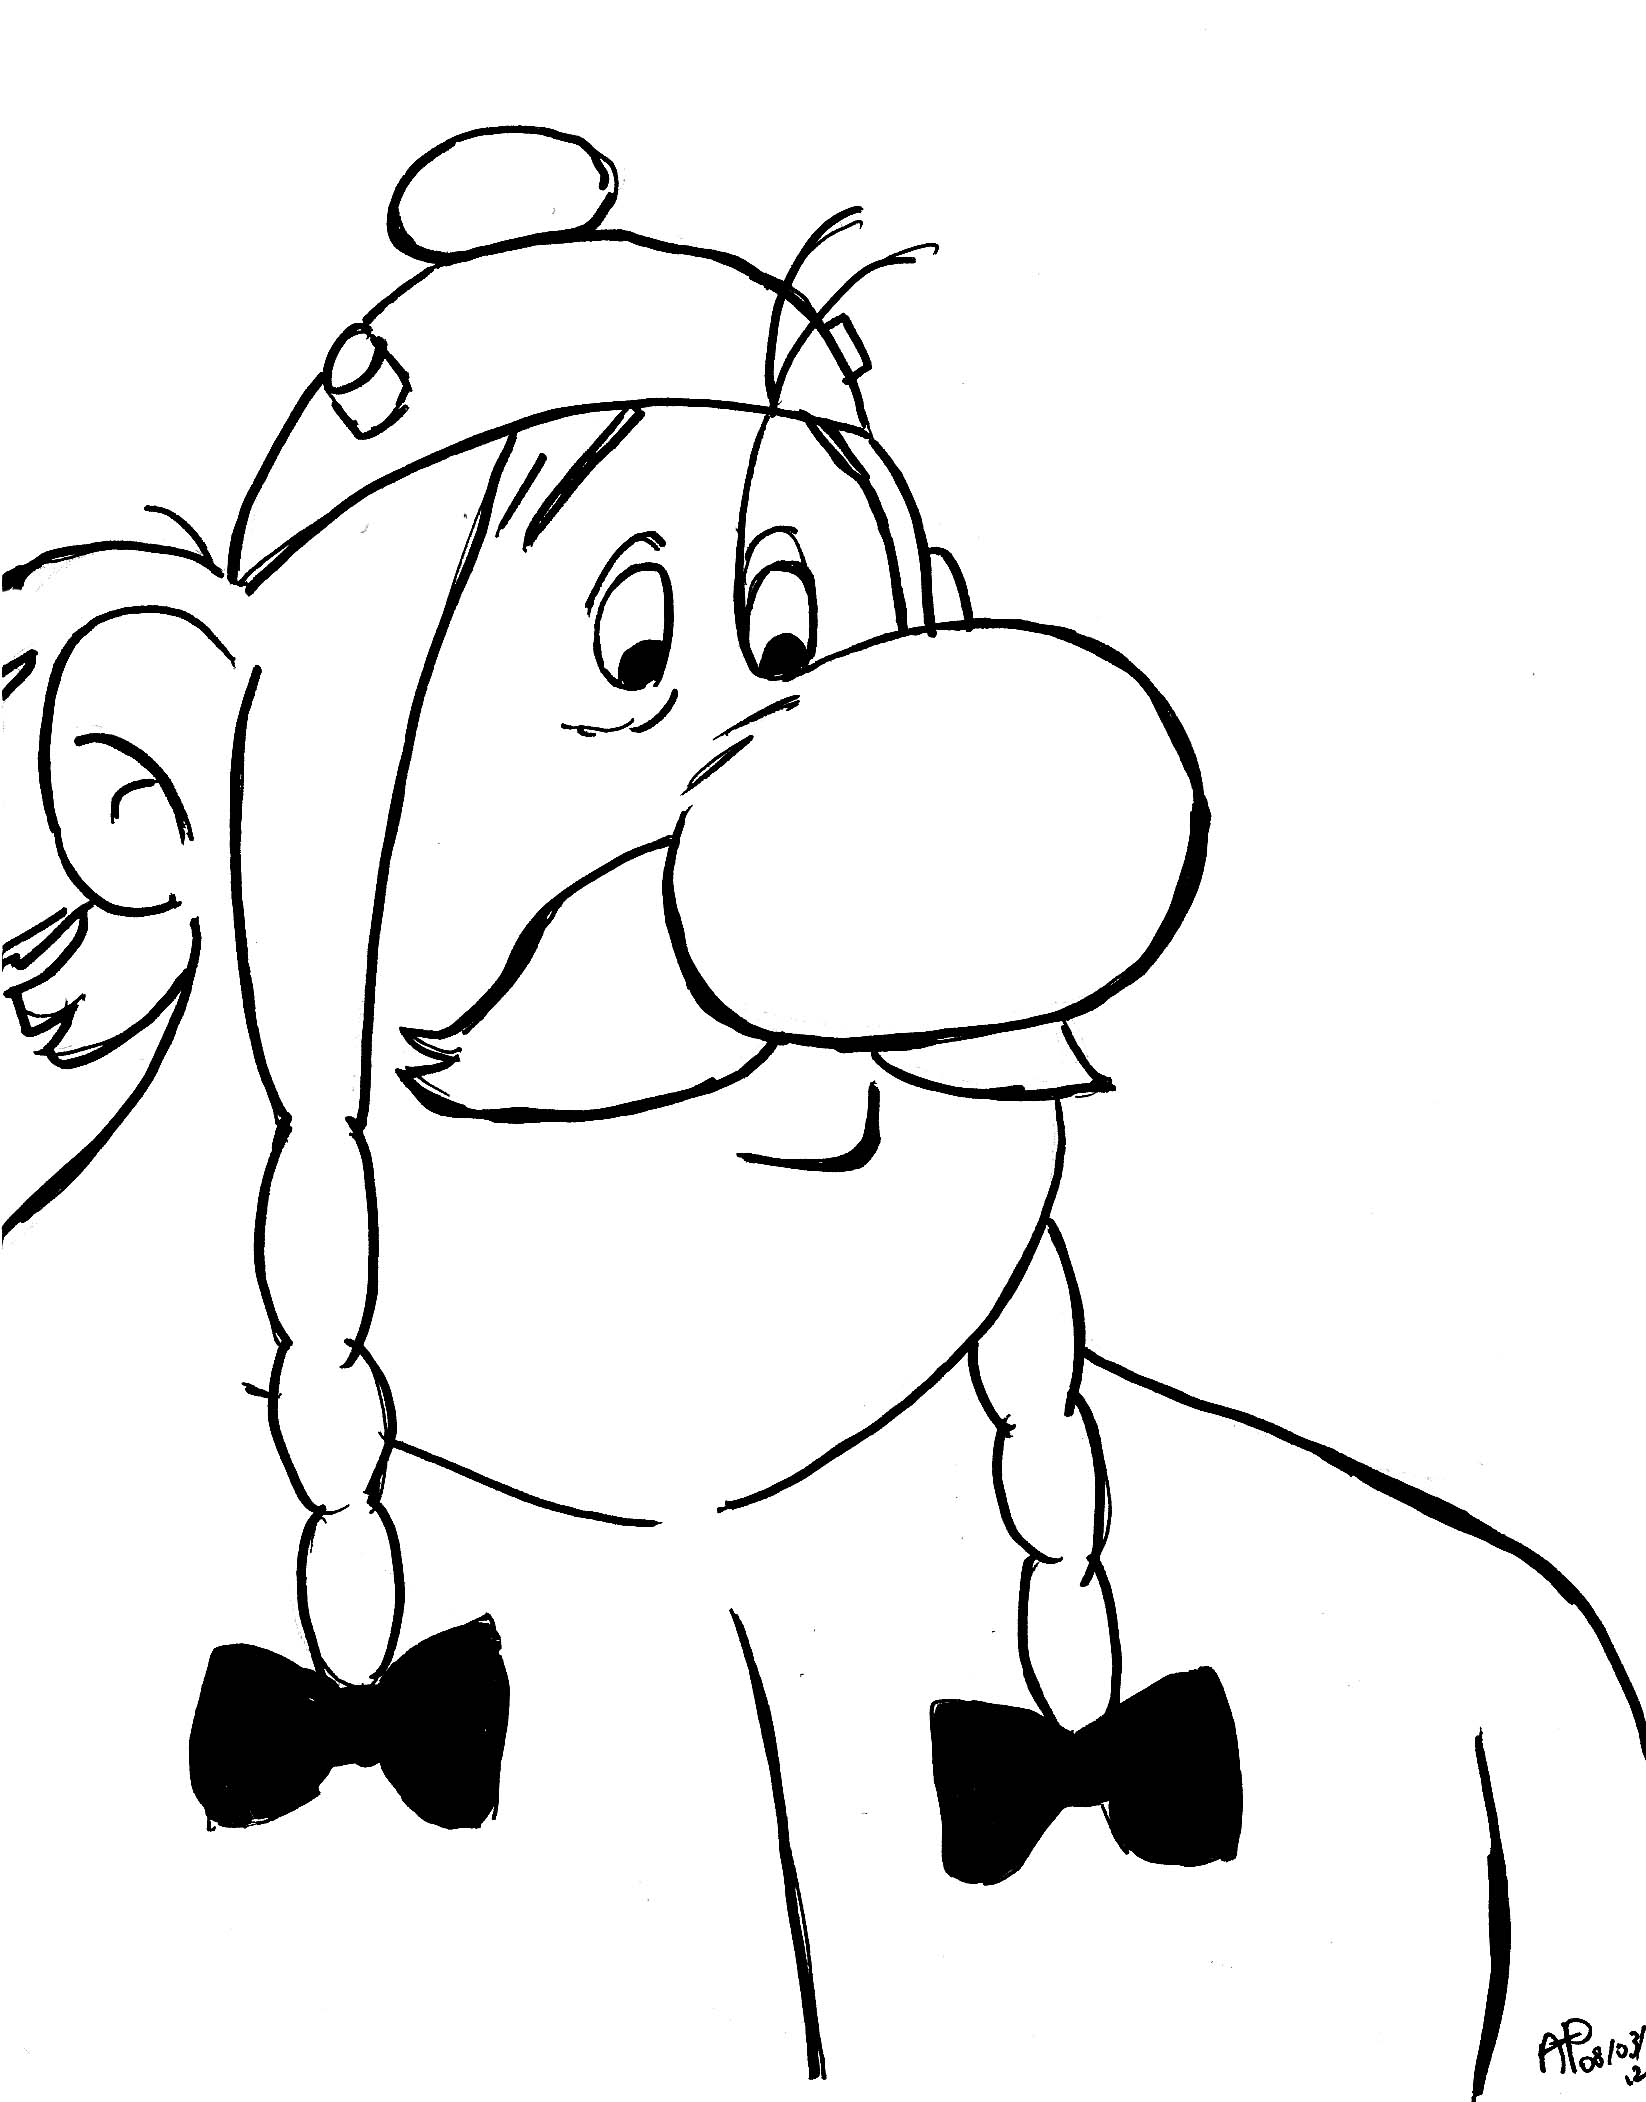 着色页: Asterix 和 Obelix (动画片) #24566 - 免费可打印着色页